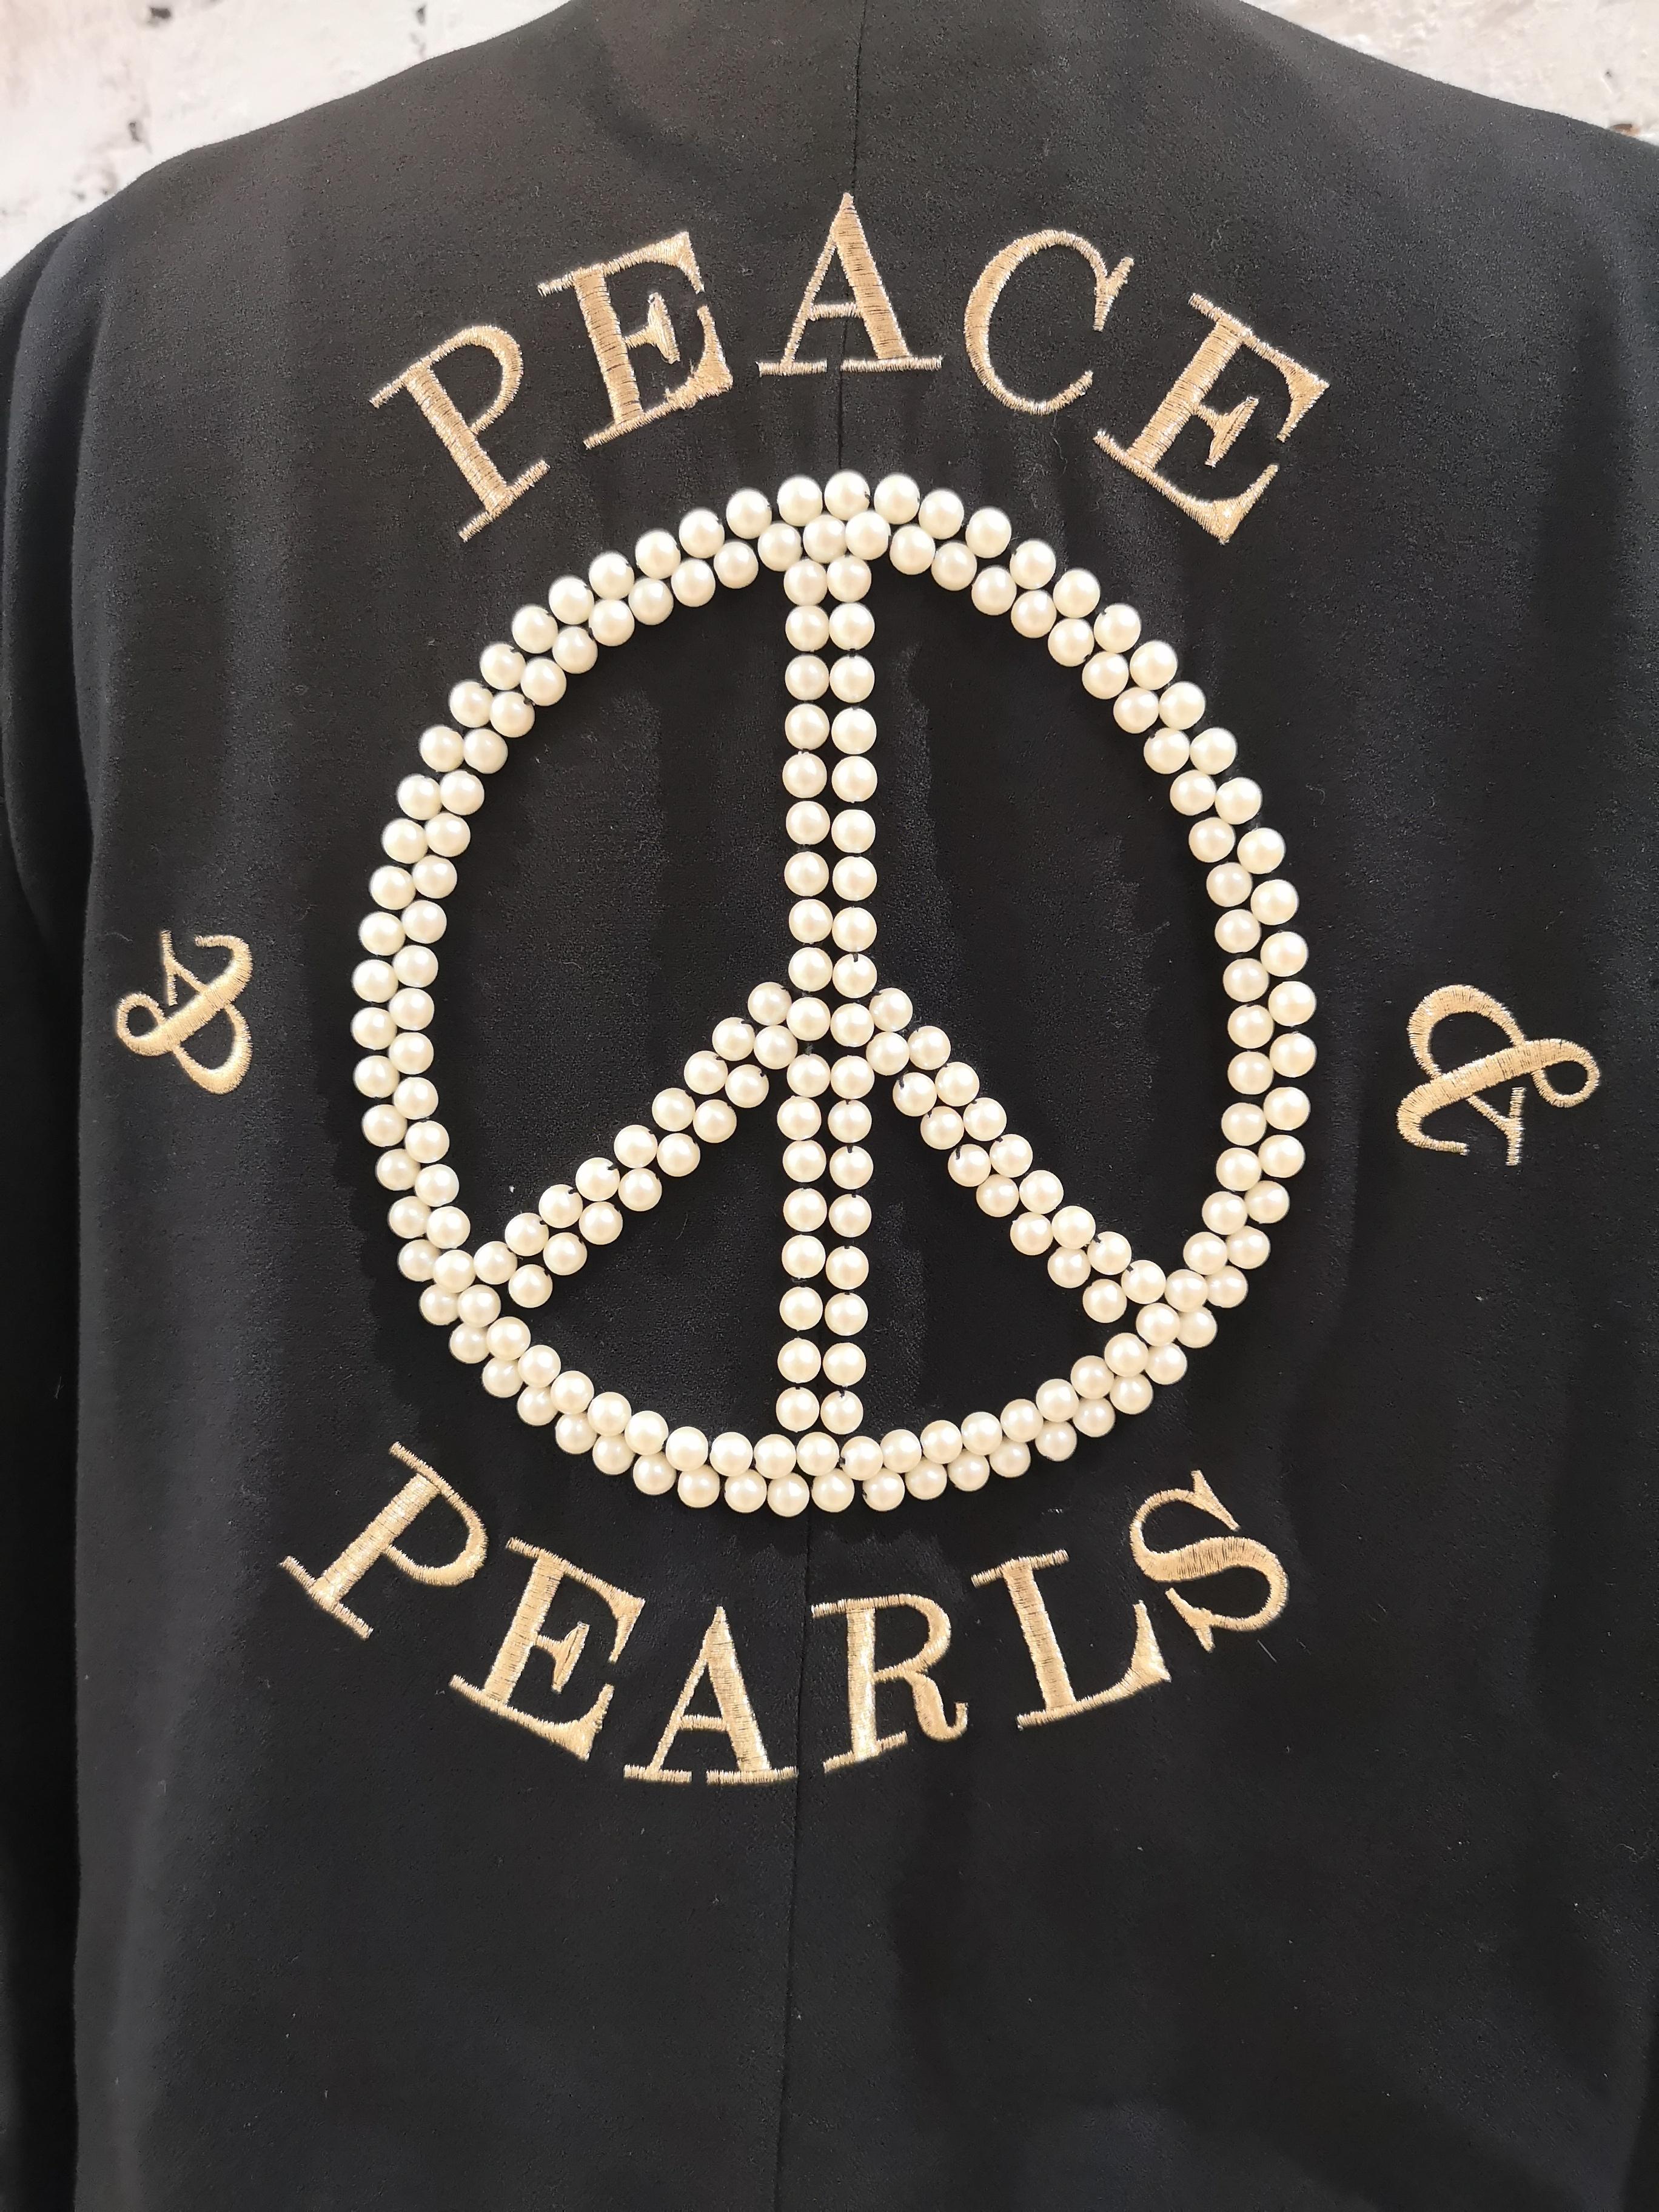 peace jacket